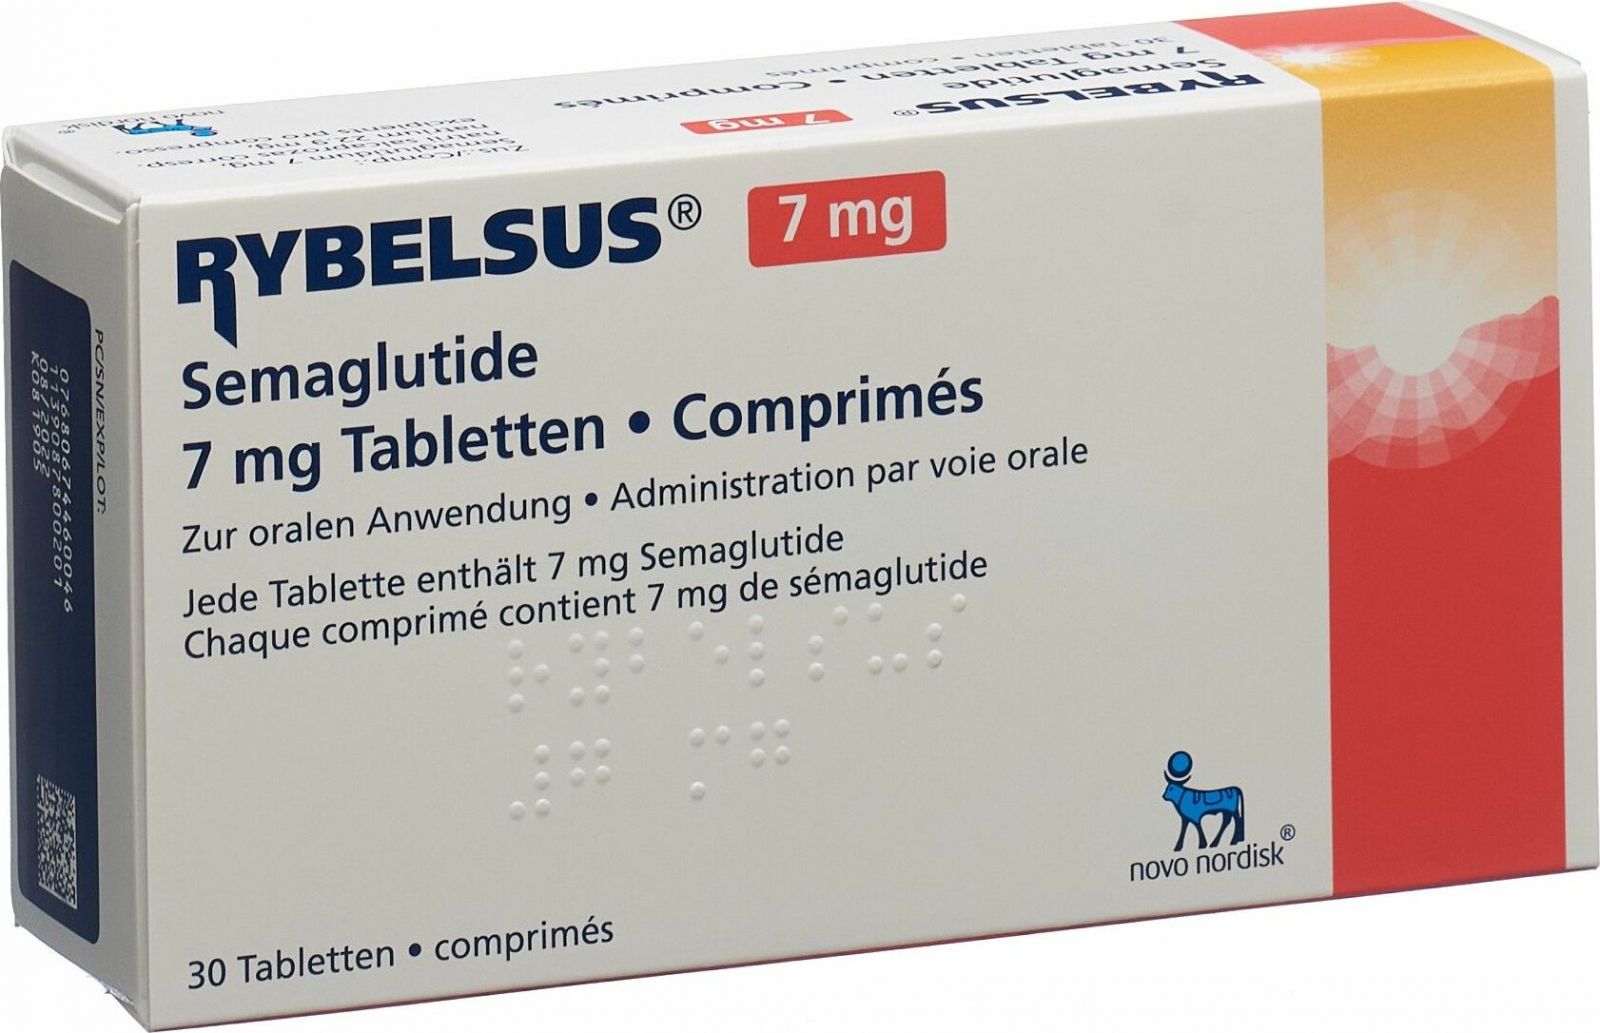 Семаглутид отзывы форум. Оземпик препарат 1 мг. Рибелсус (rybelsus, семаглутид). Оземпик 3 мг. Rybelsus 7 мг.